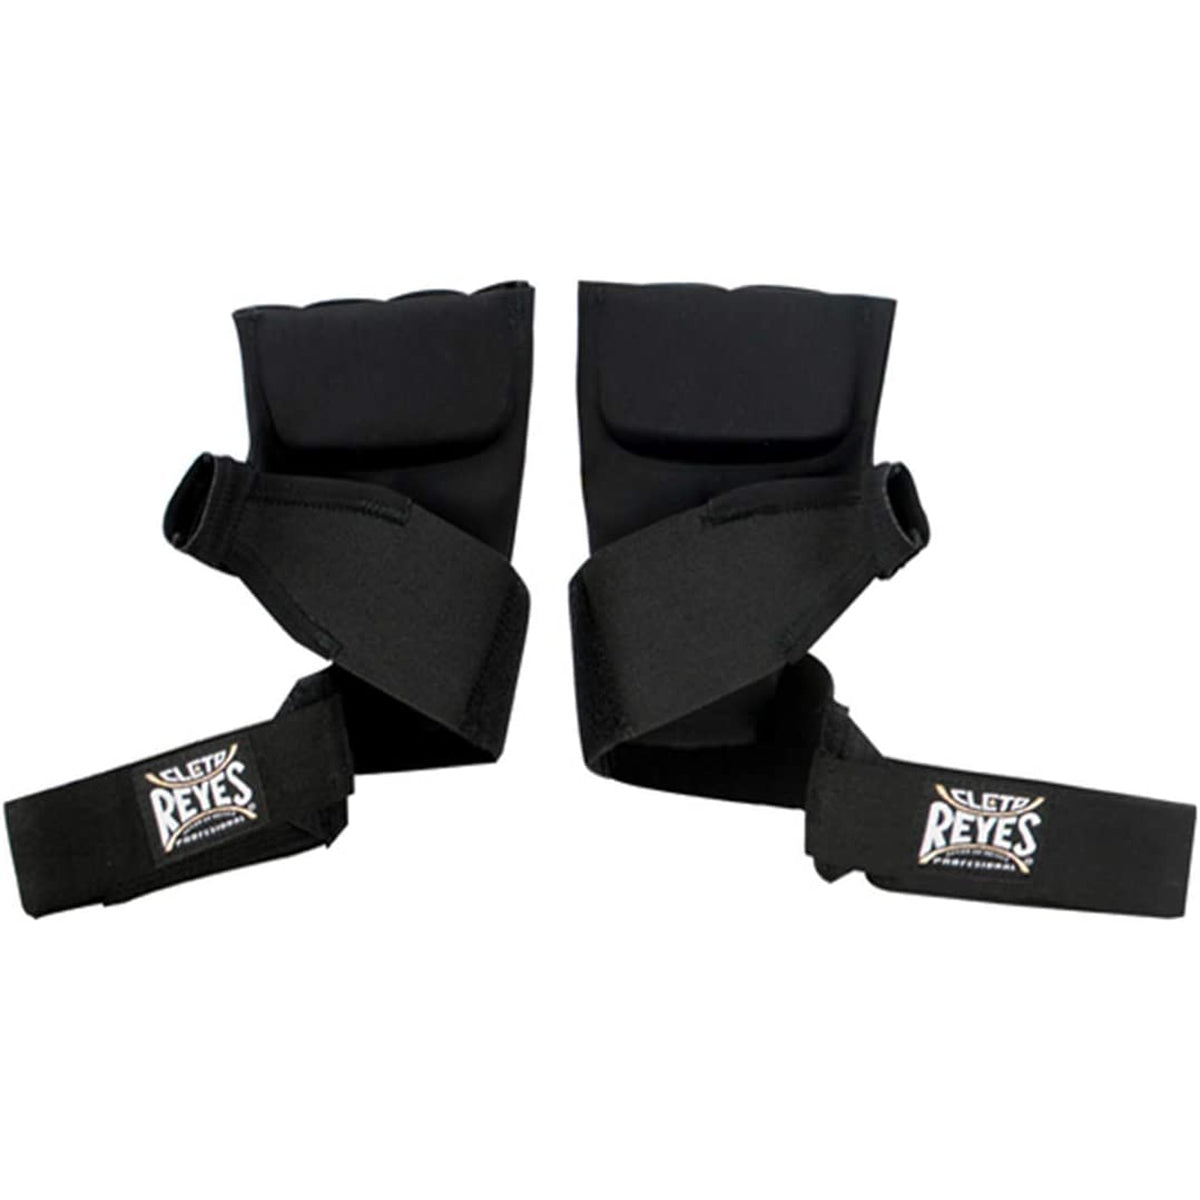 Cleto Reyes Evolution Boxing Handwraps - Large - Black Cleto Reyes